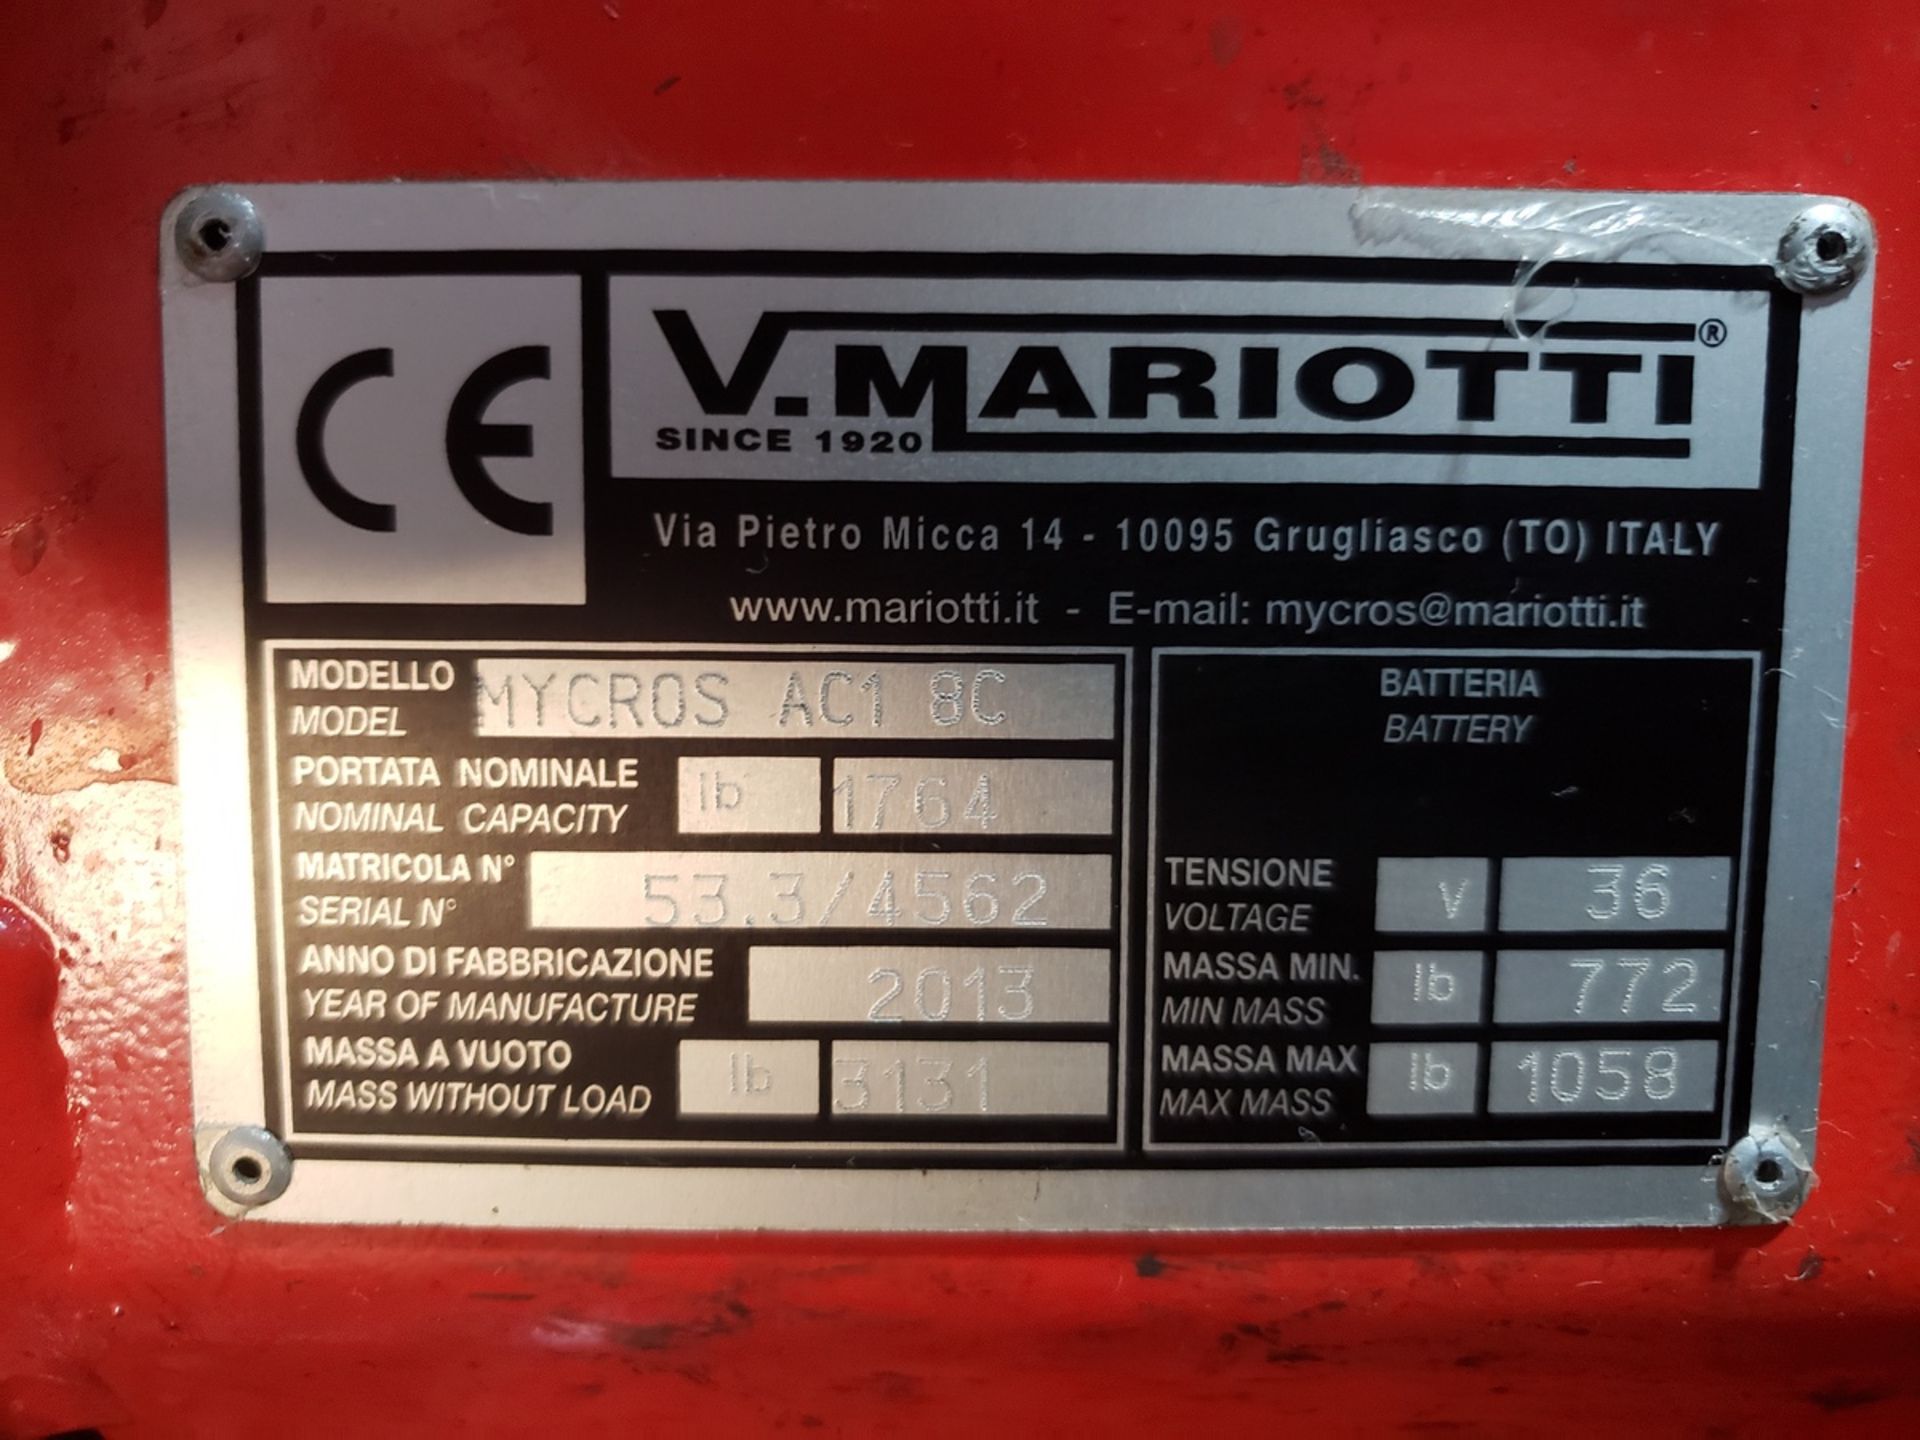 V.Mariotti Forklift, 1700 Lbs. Cap. , M# MYCROS AC1 8C, S/N 53.3/4562 | Rig Fee: $150 - Image 2 of 2